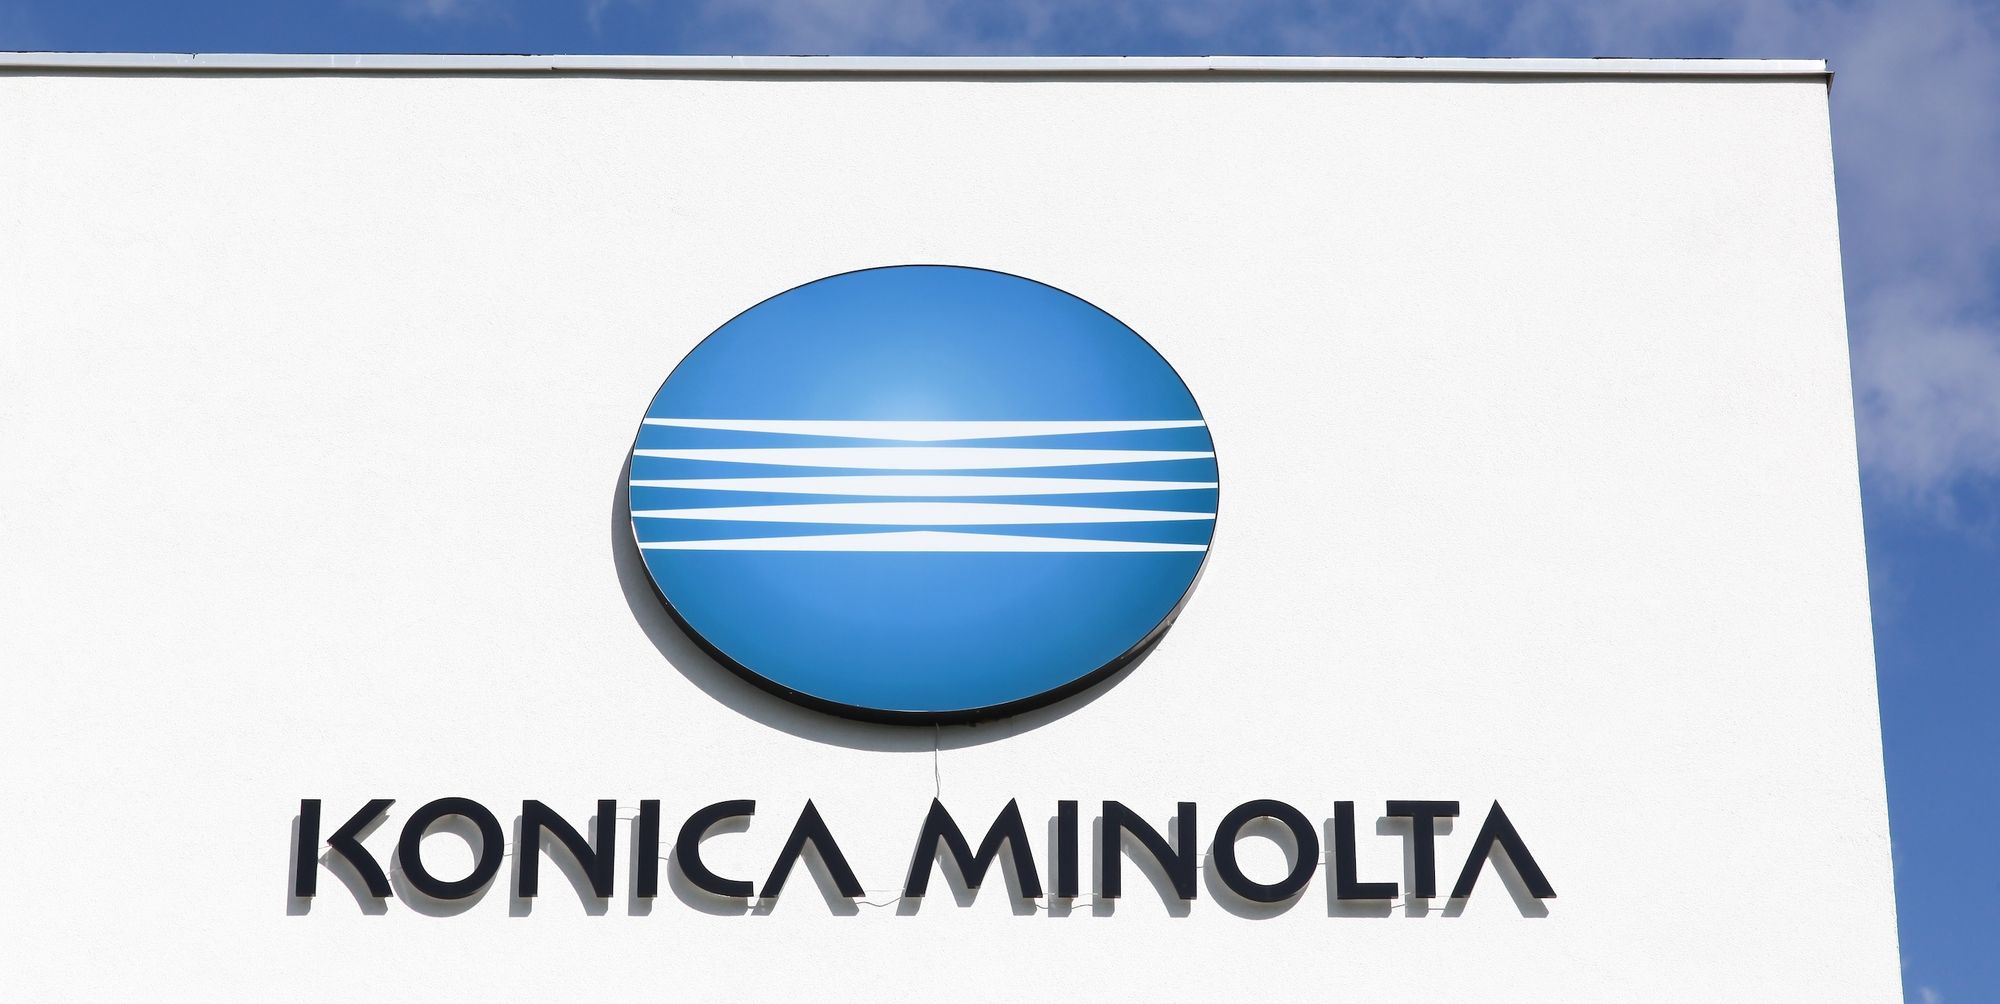 Konica Minolta Latest Victim of Human Operated Ransomware